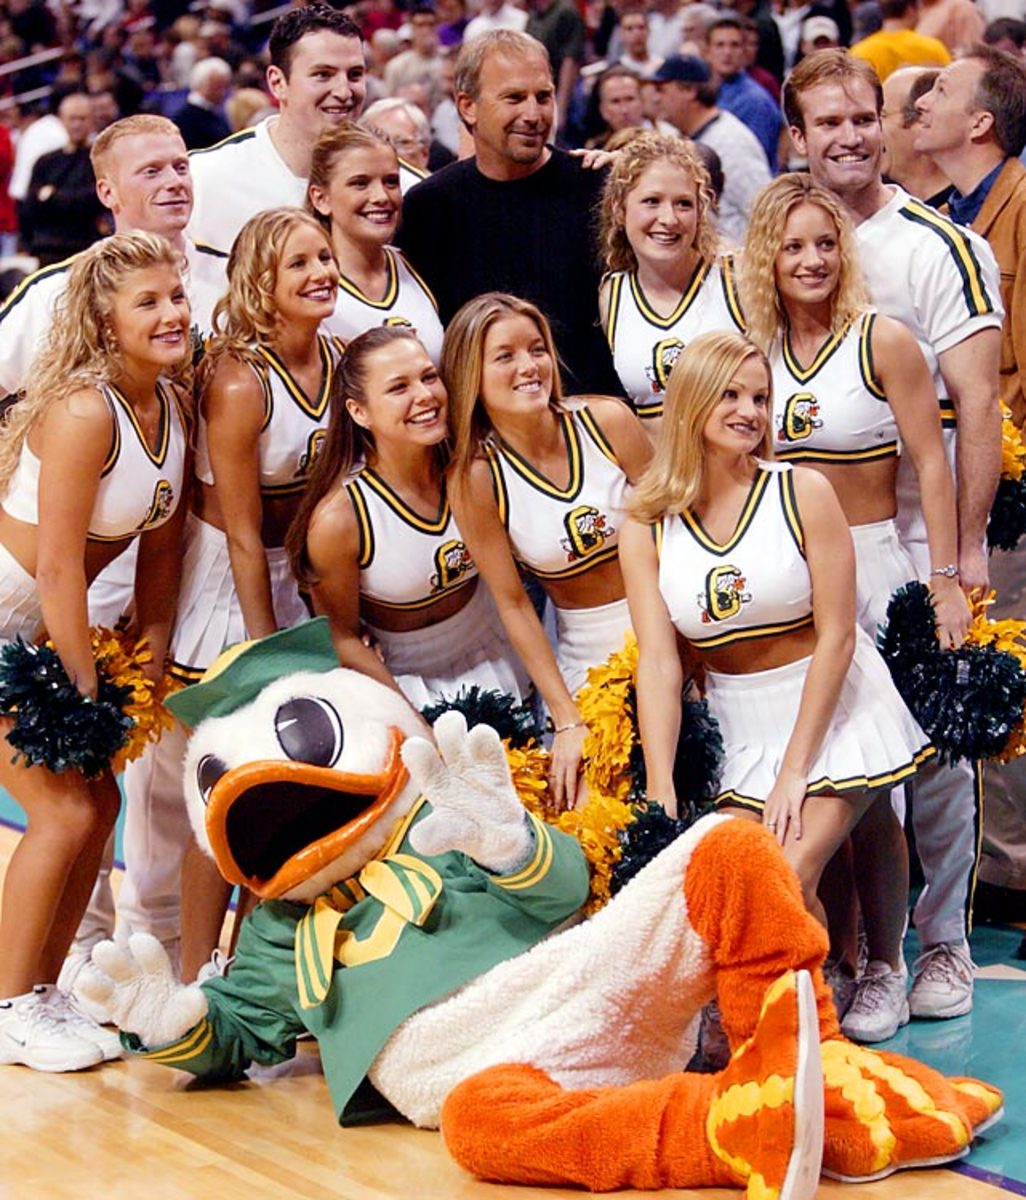 Kevin Costner and Oregon Ducks Cheerleaders